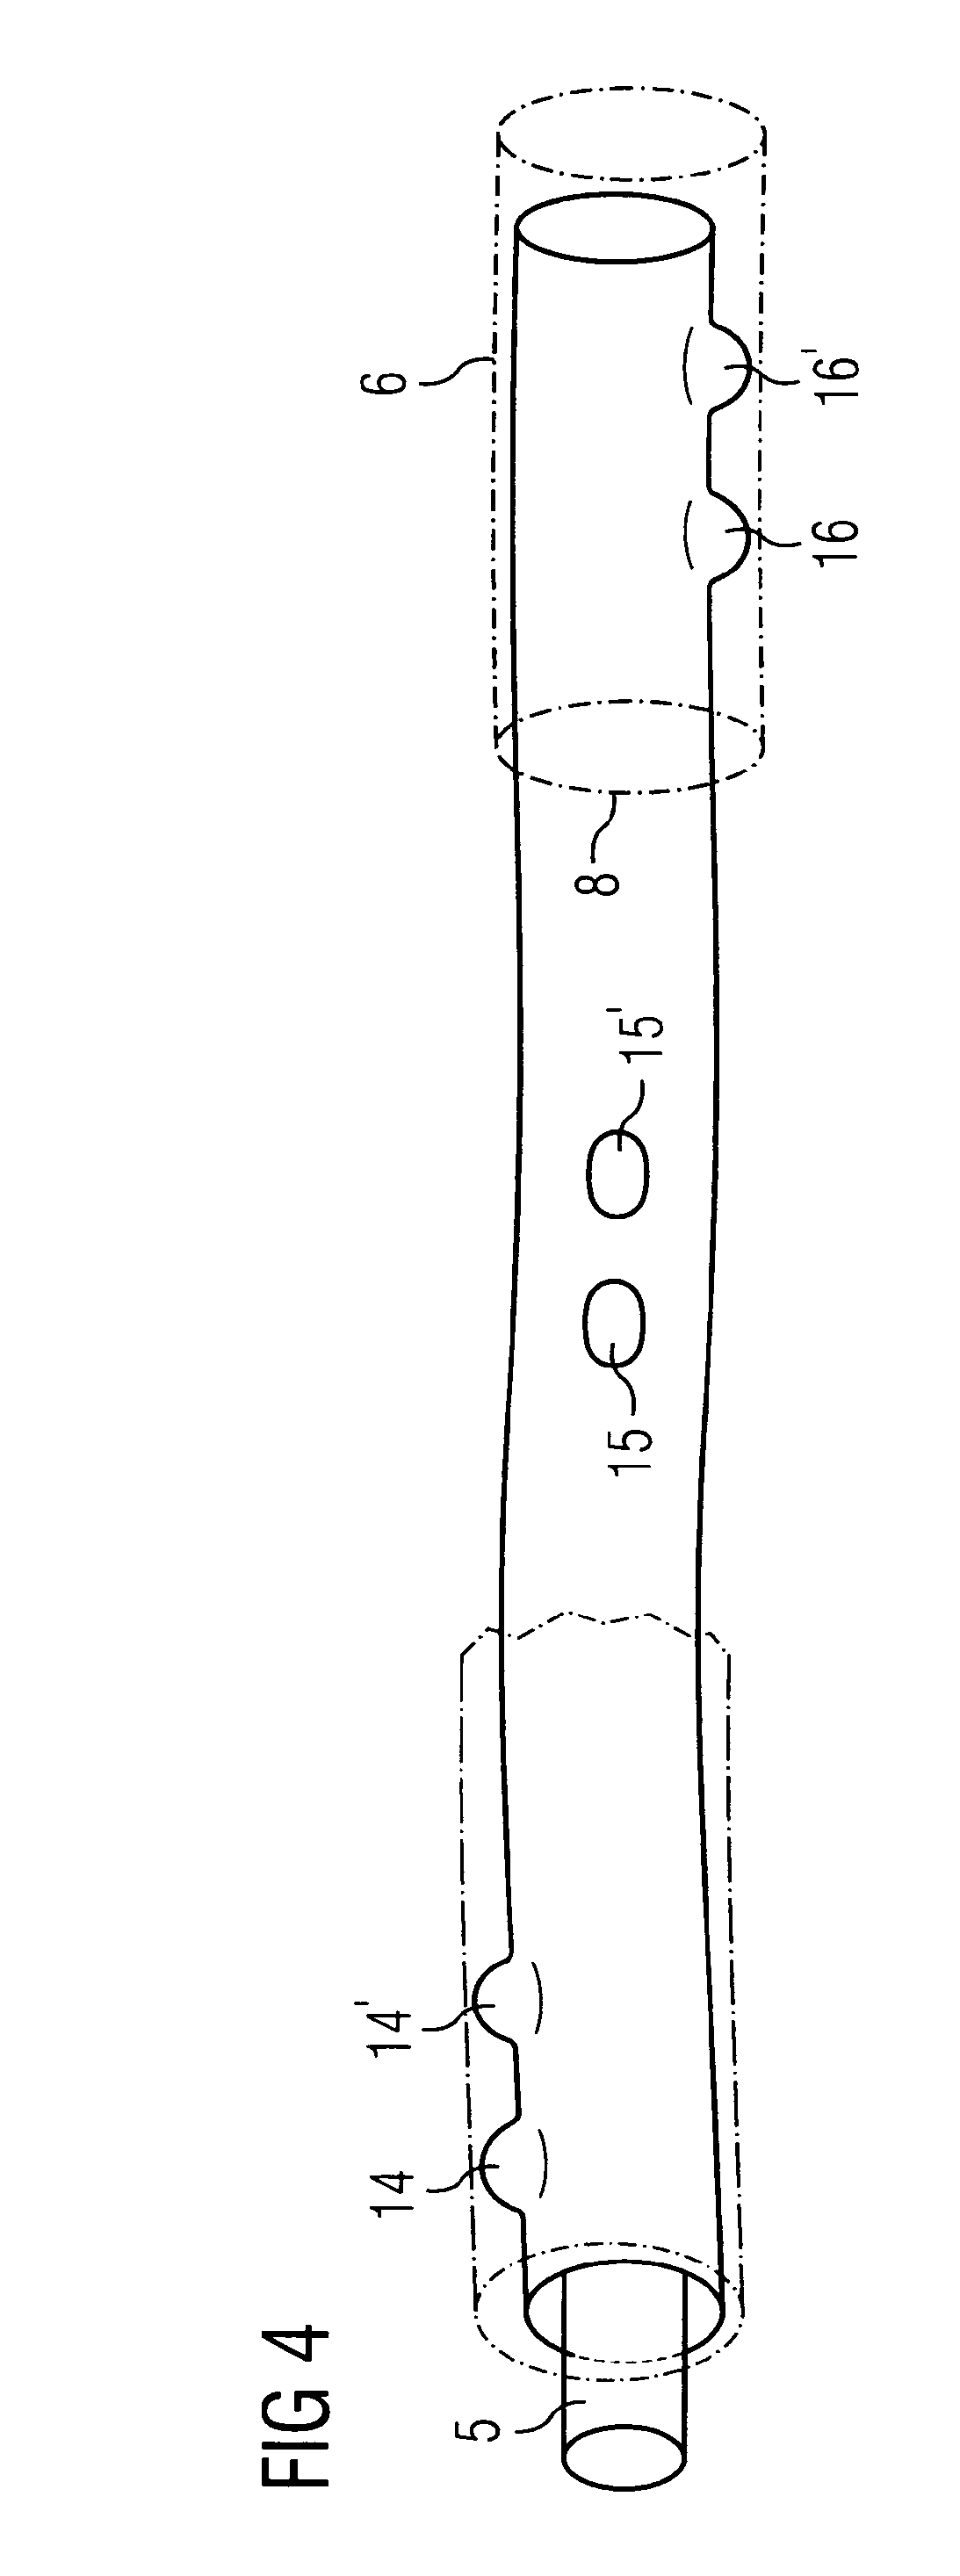 Flexible shaft arrangement